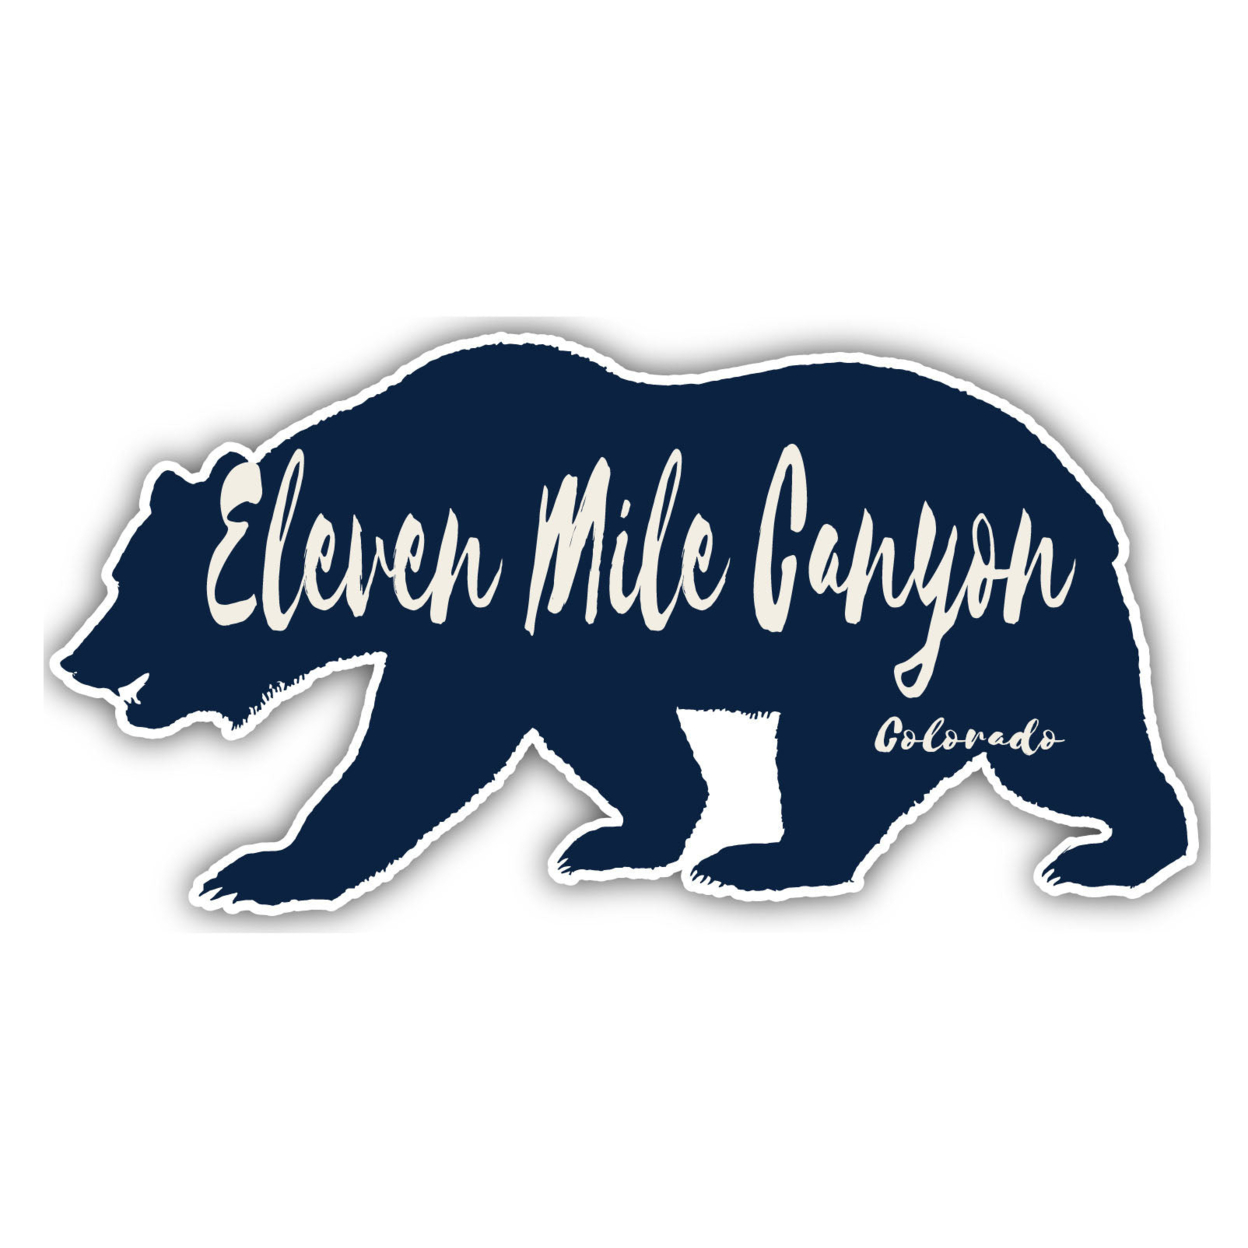 Eleven Mile Canyon Colorado Souvenir Decorative Stickers (Choose Theme And Size) - Single Unit, 2-Inch, Tent